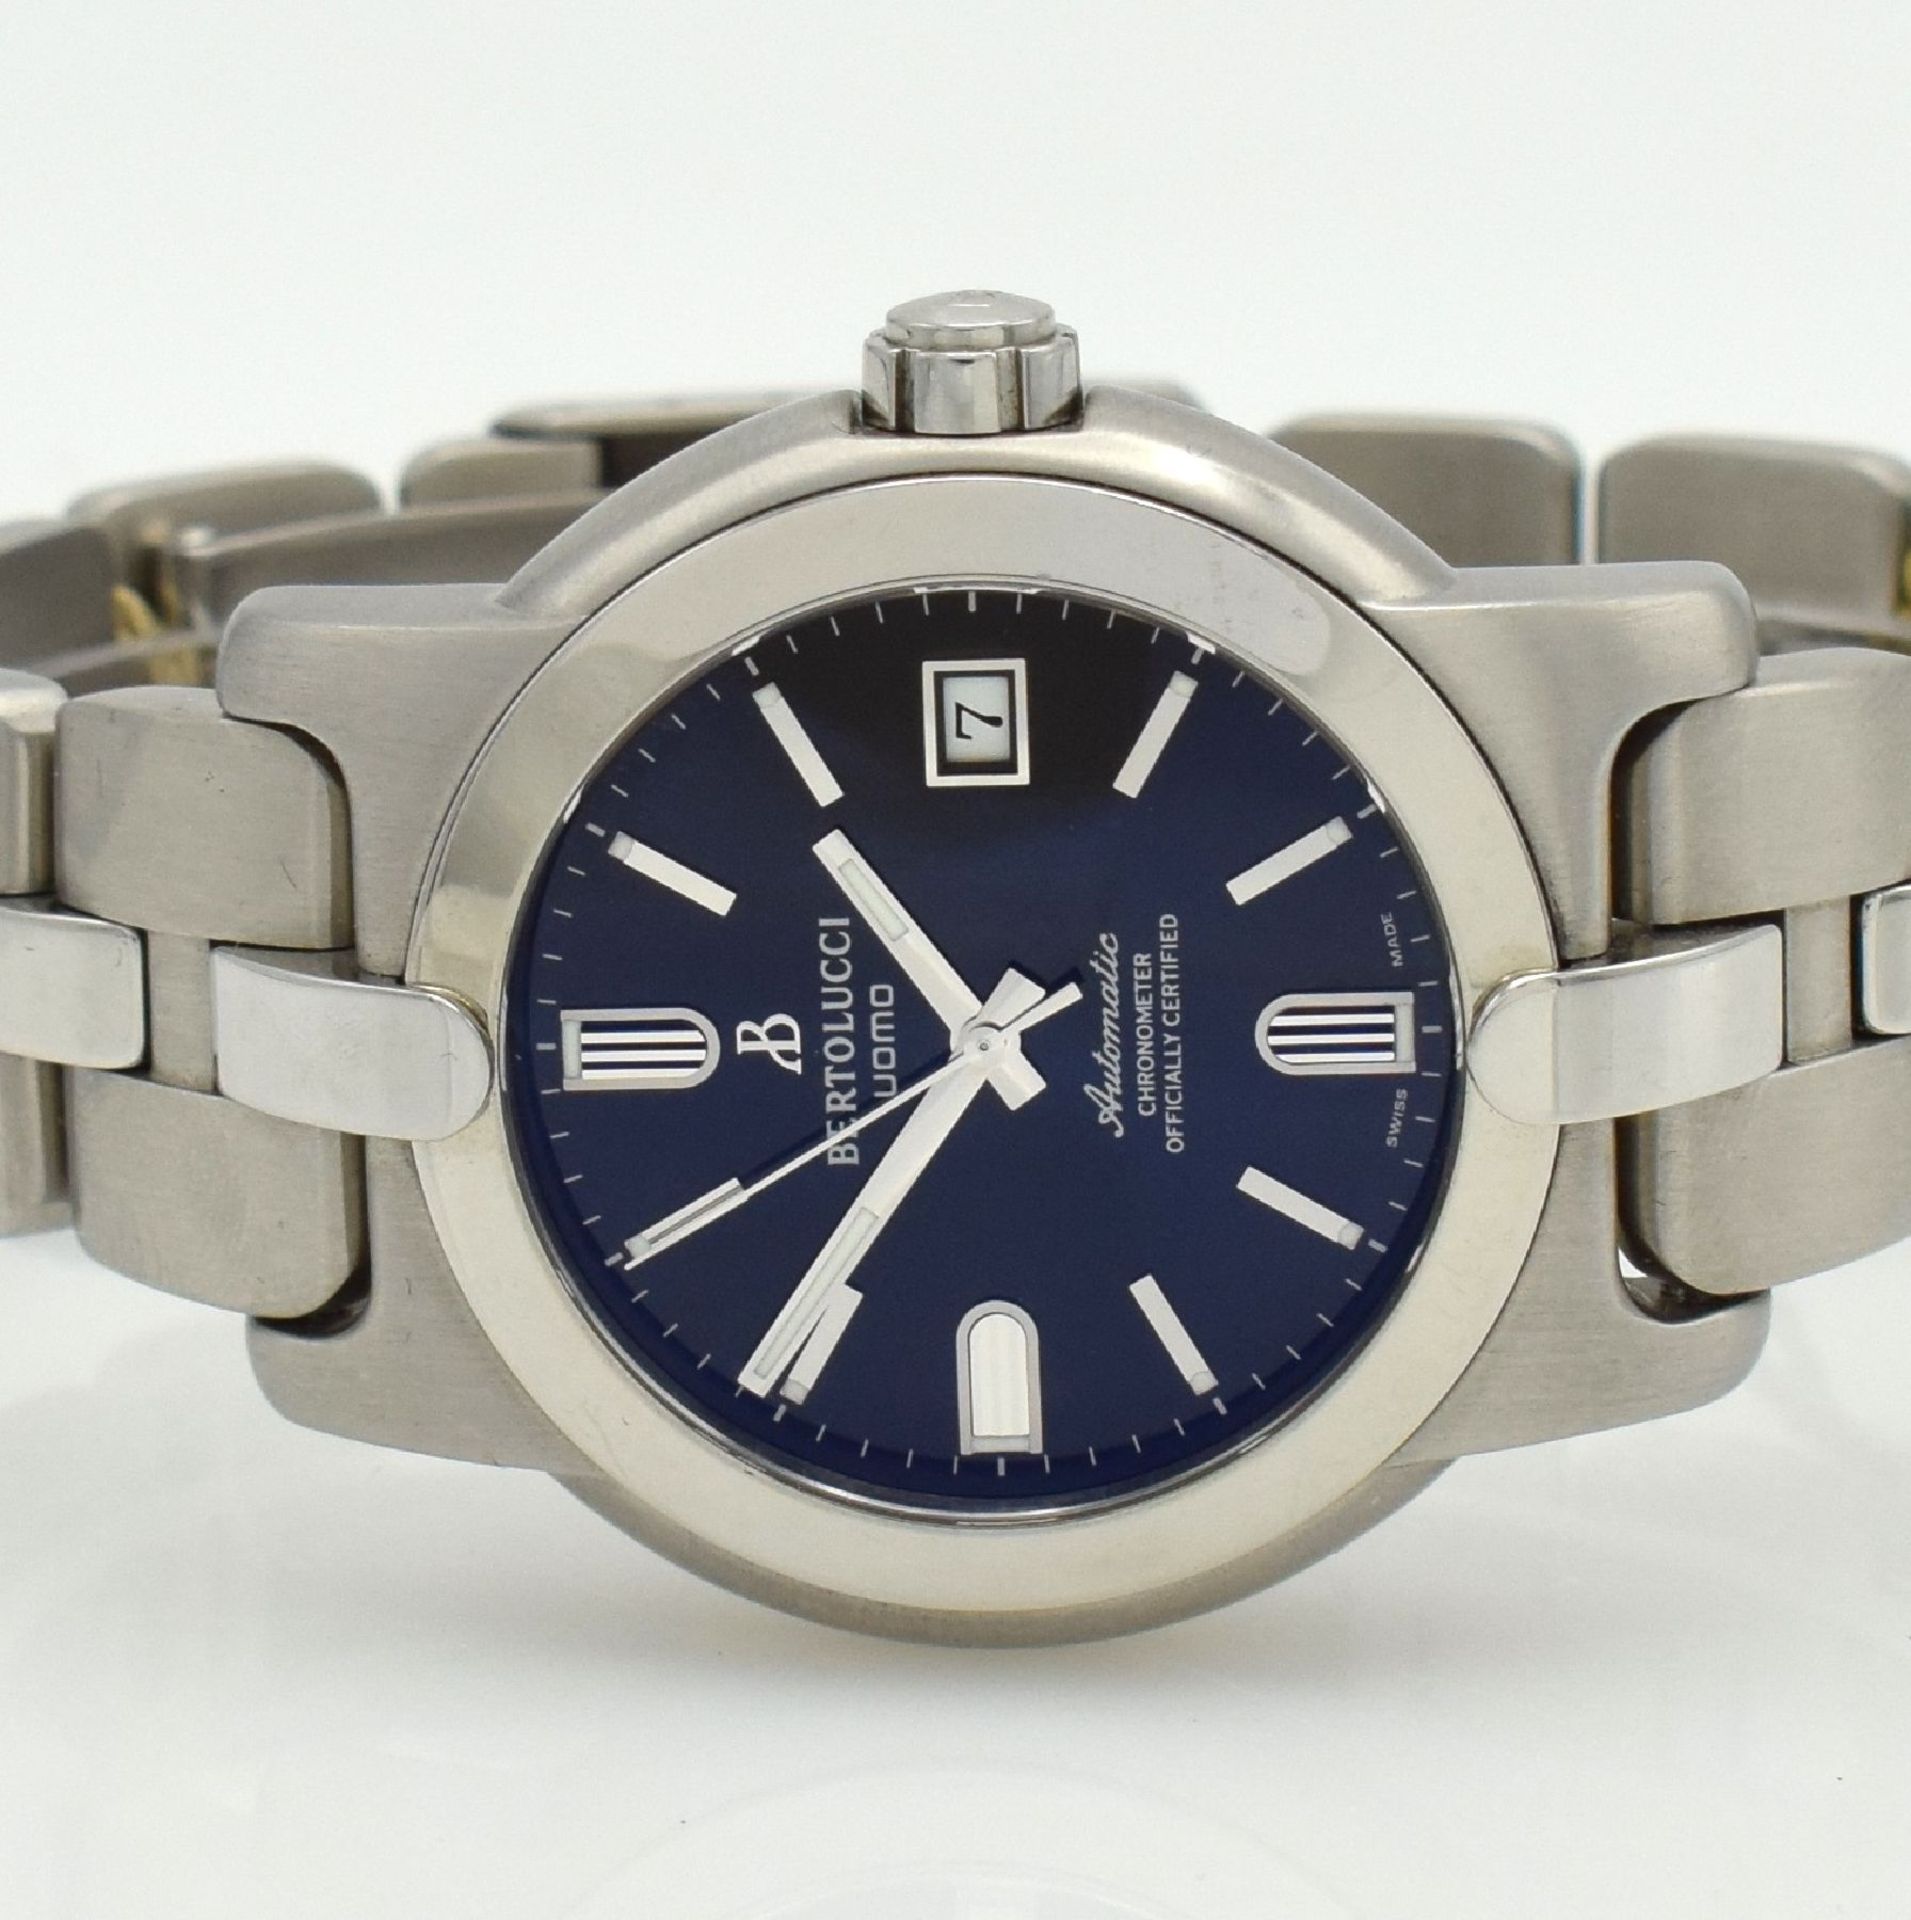 BERTOLUCCI Uomo chronometer gents wristwatch, Switzerland around 2000, self winding, screwed down - Bild 2 aus 7